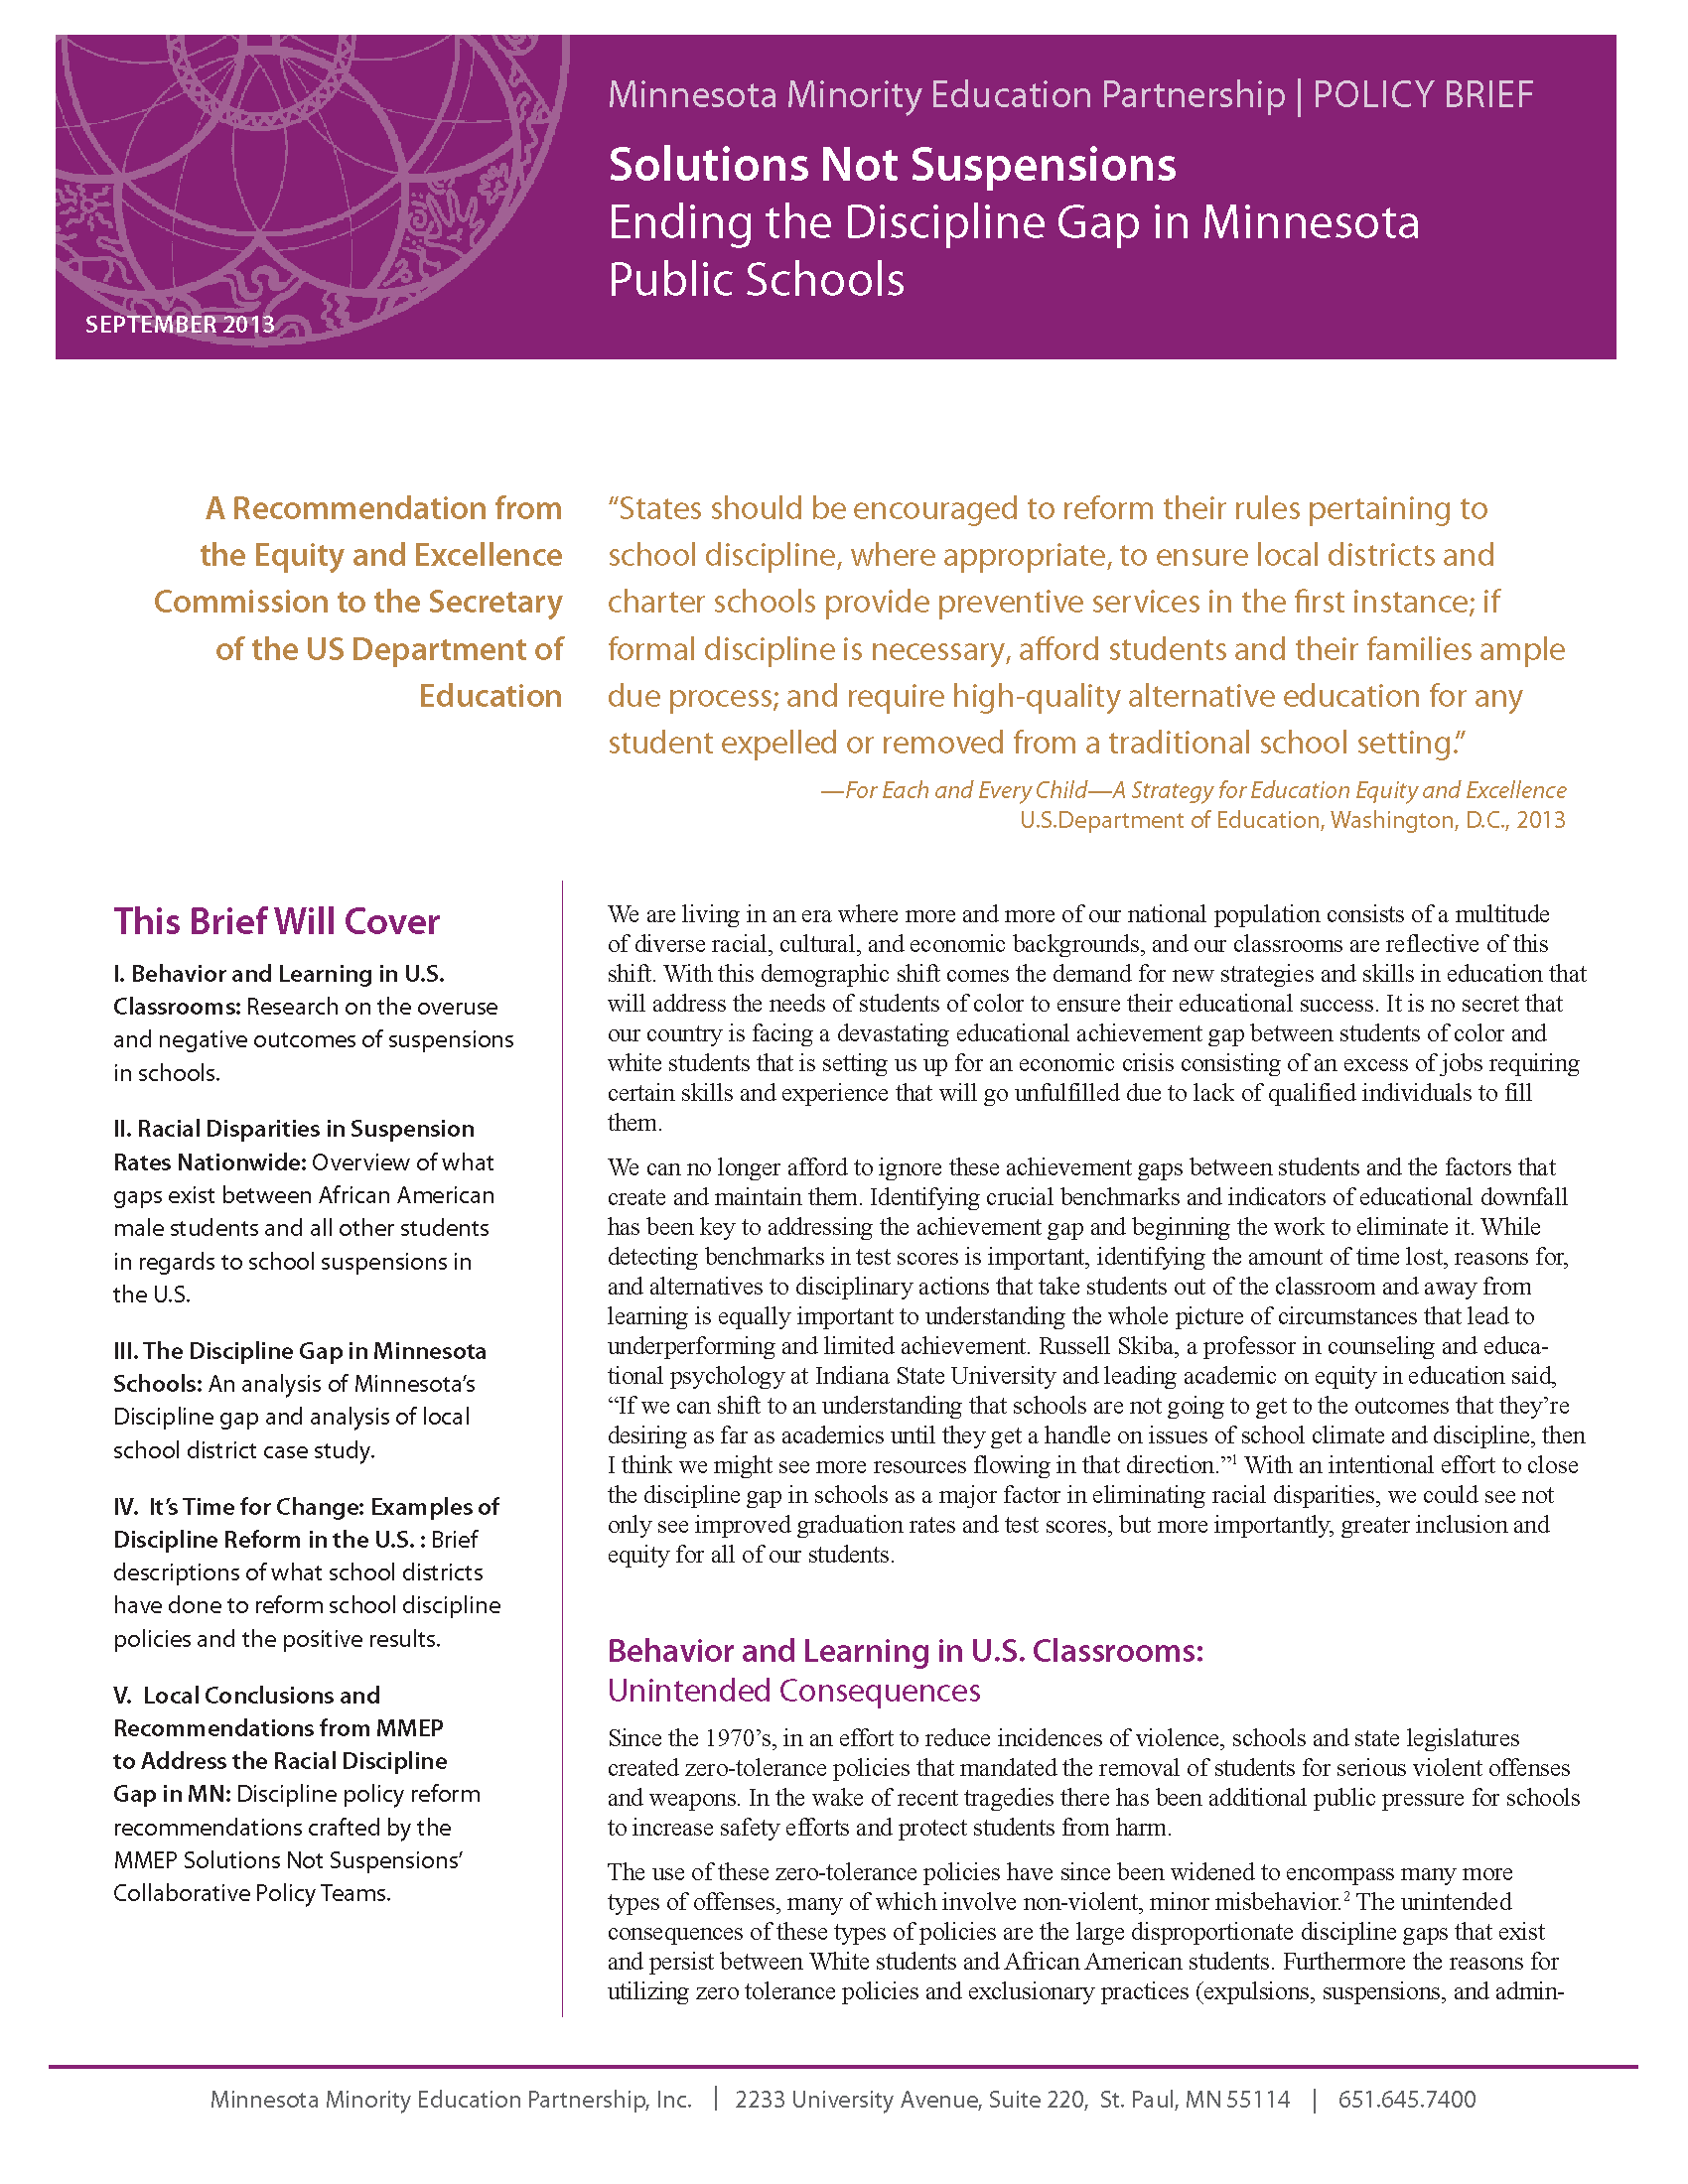 Solutions not Suspensions - ending the discipline gap in Minnesota Public Schools